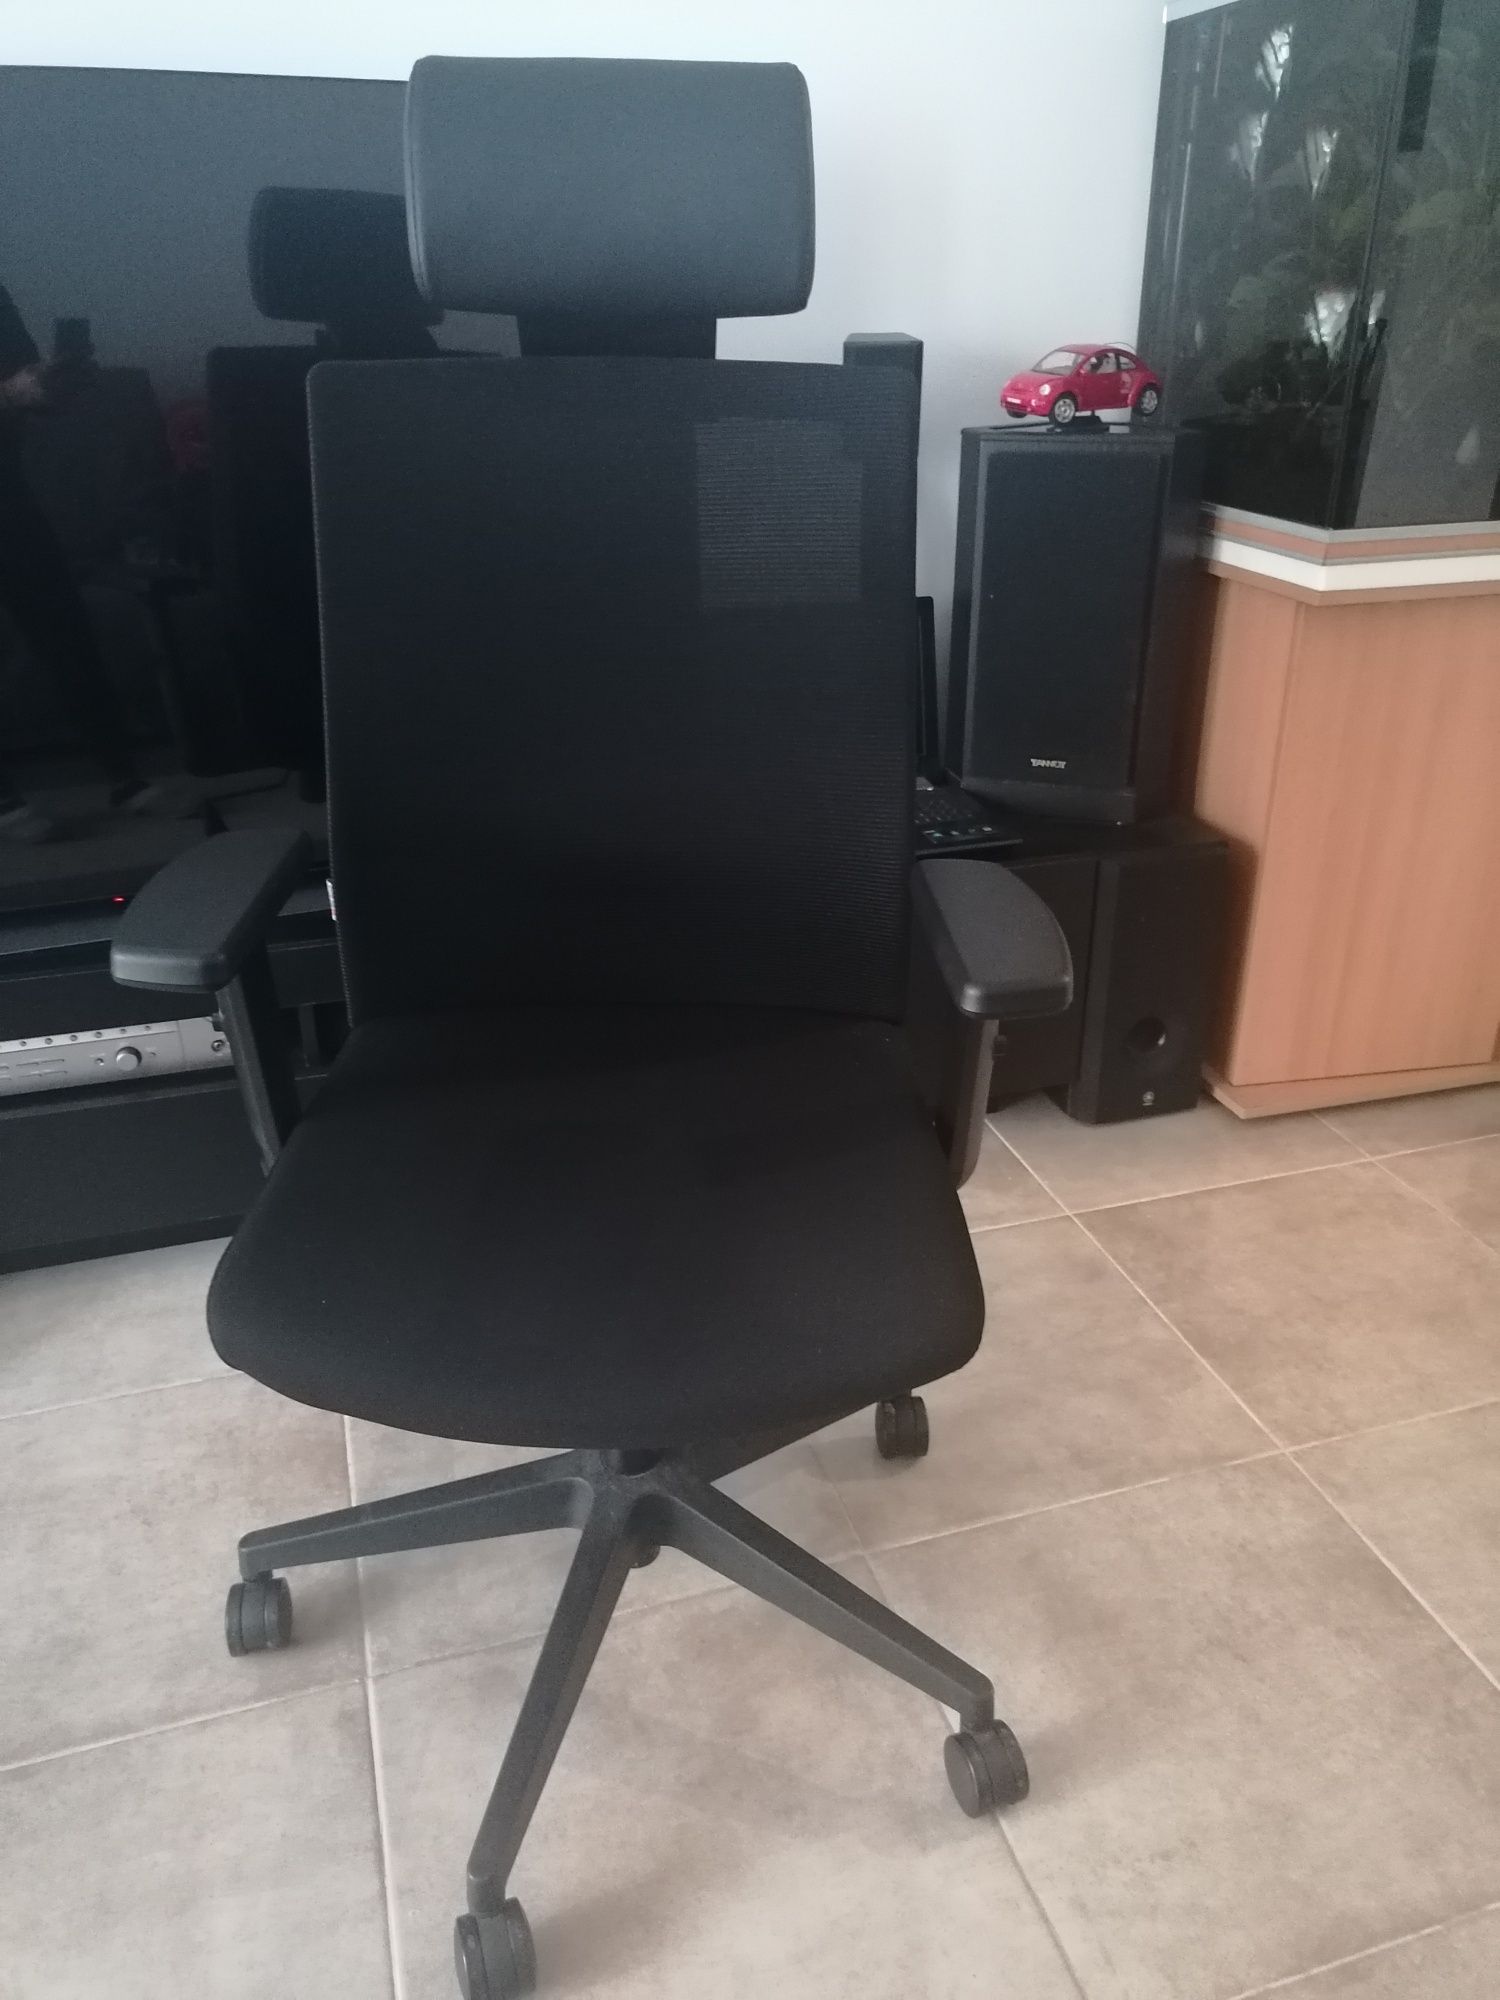 Ergonomic black office chair